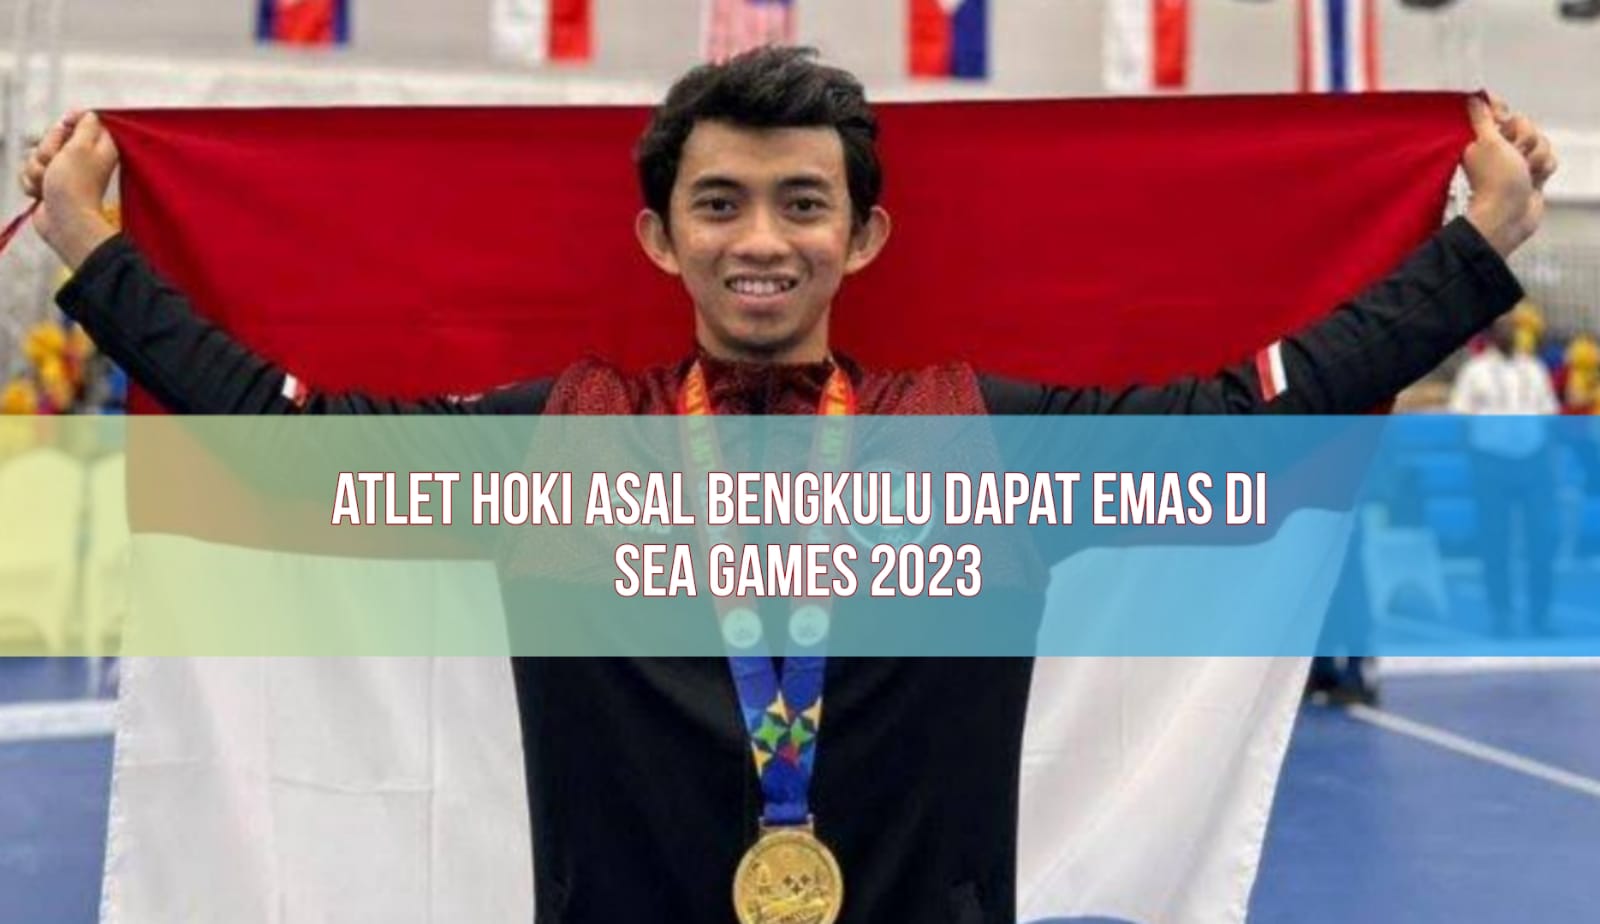 Atlet Hoki Penyumbang Emas di SEA Games 2023, Ternyata Orang Bengkulu! Ini Sosoknya...